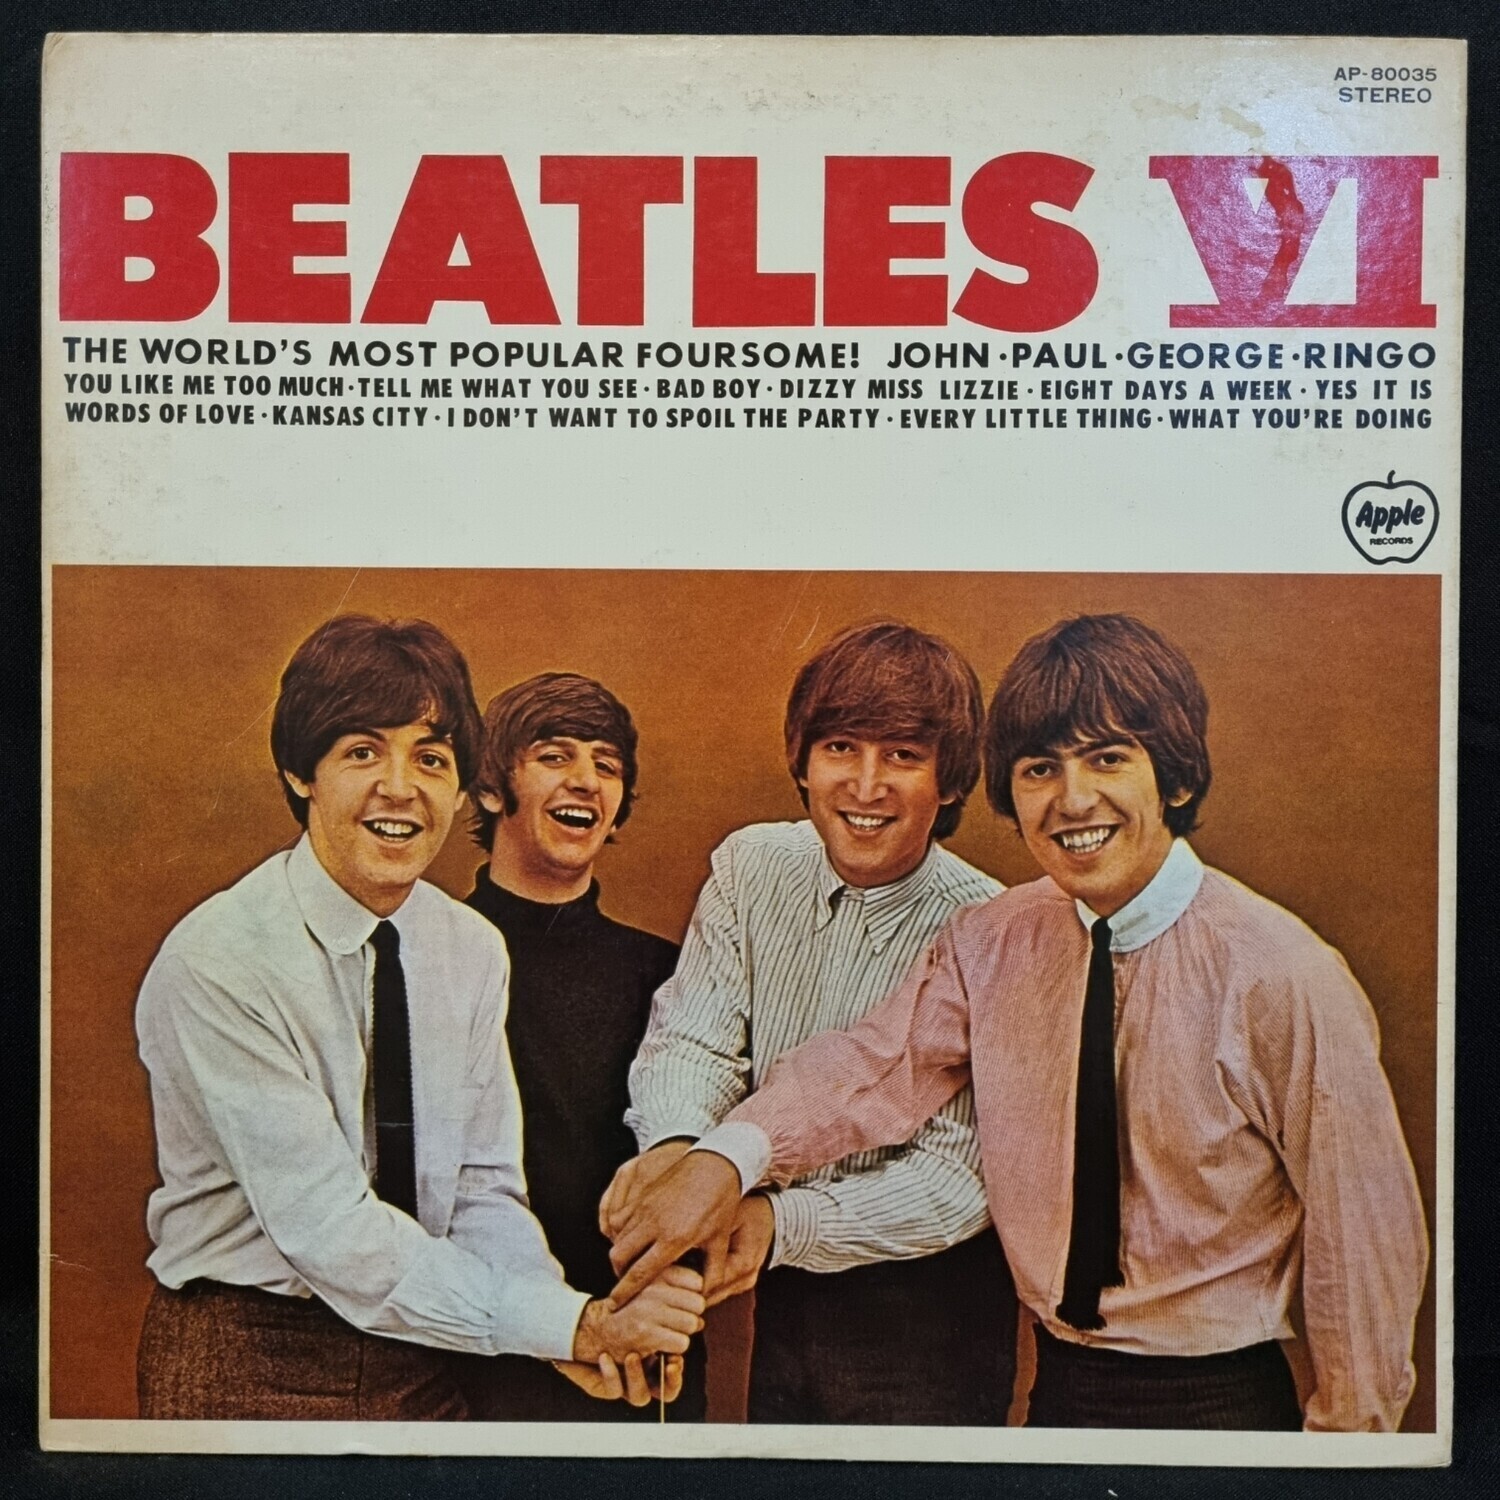 The Beatles- Beatles VI